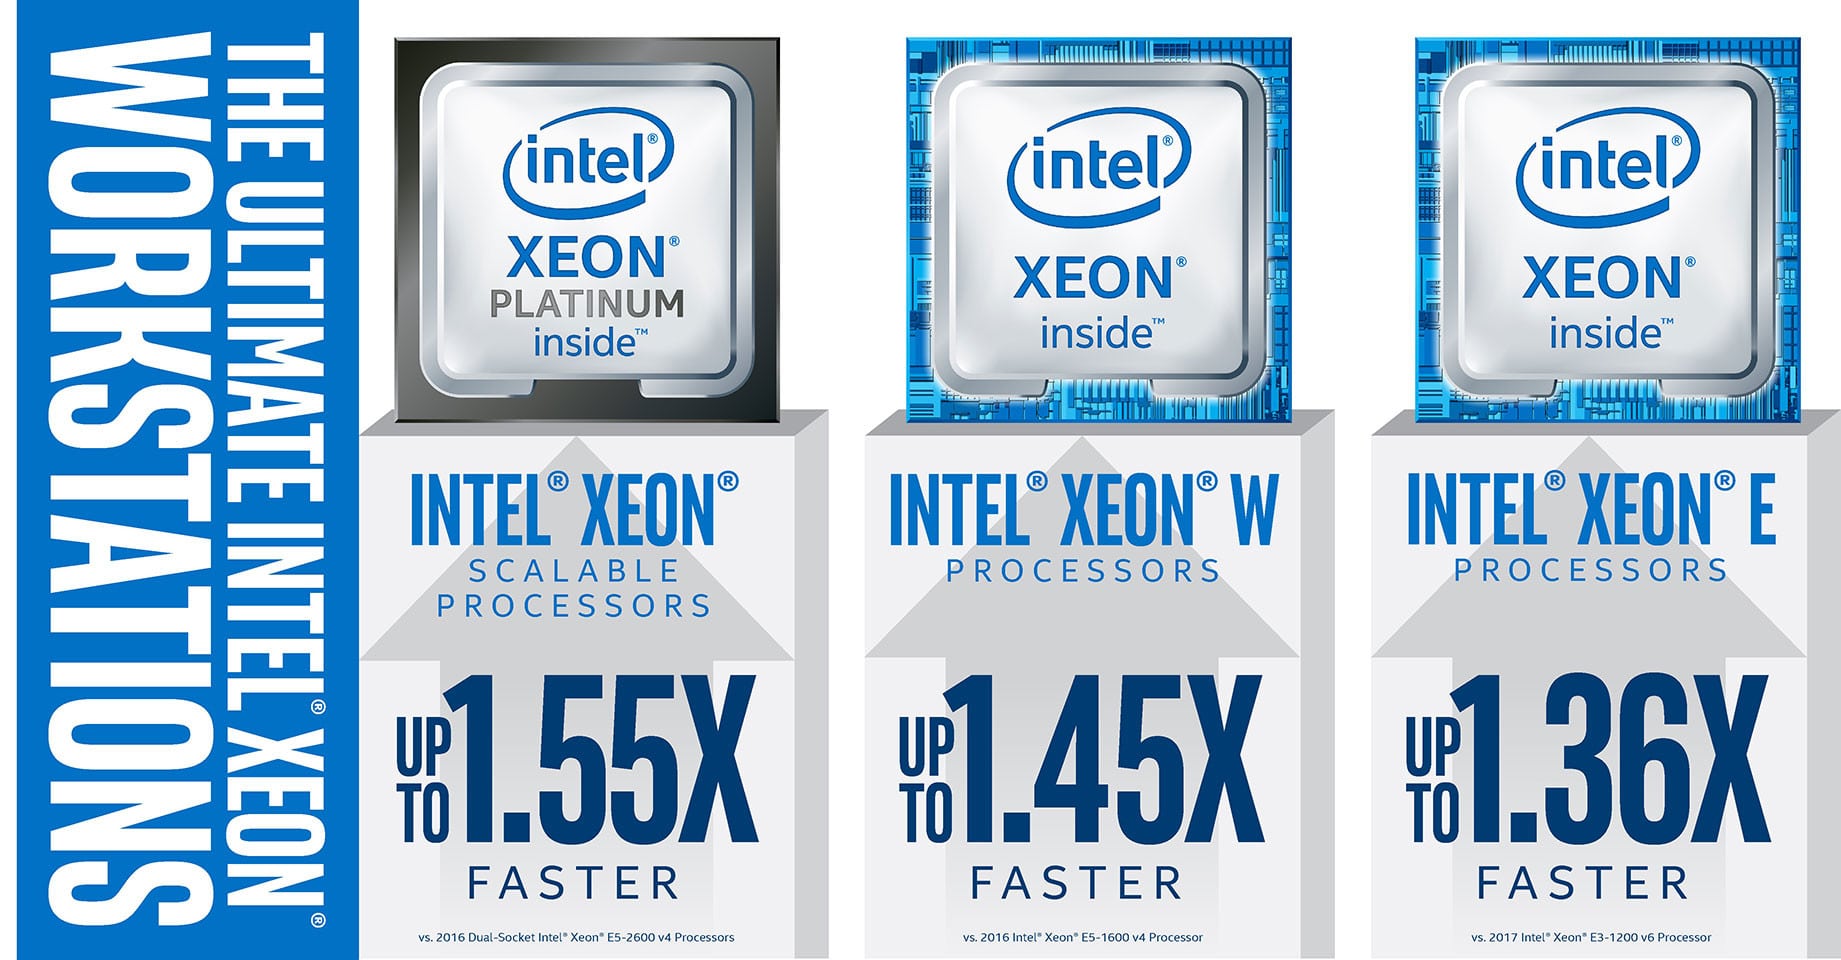 Intel Xeon E-2100, a new processor for small workstations